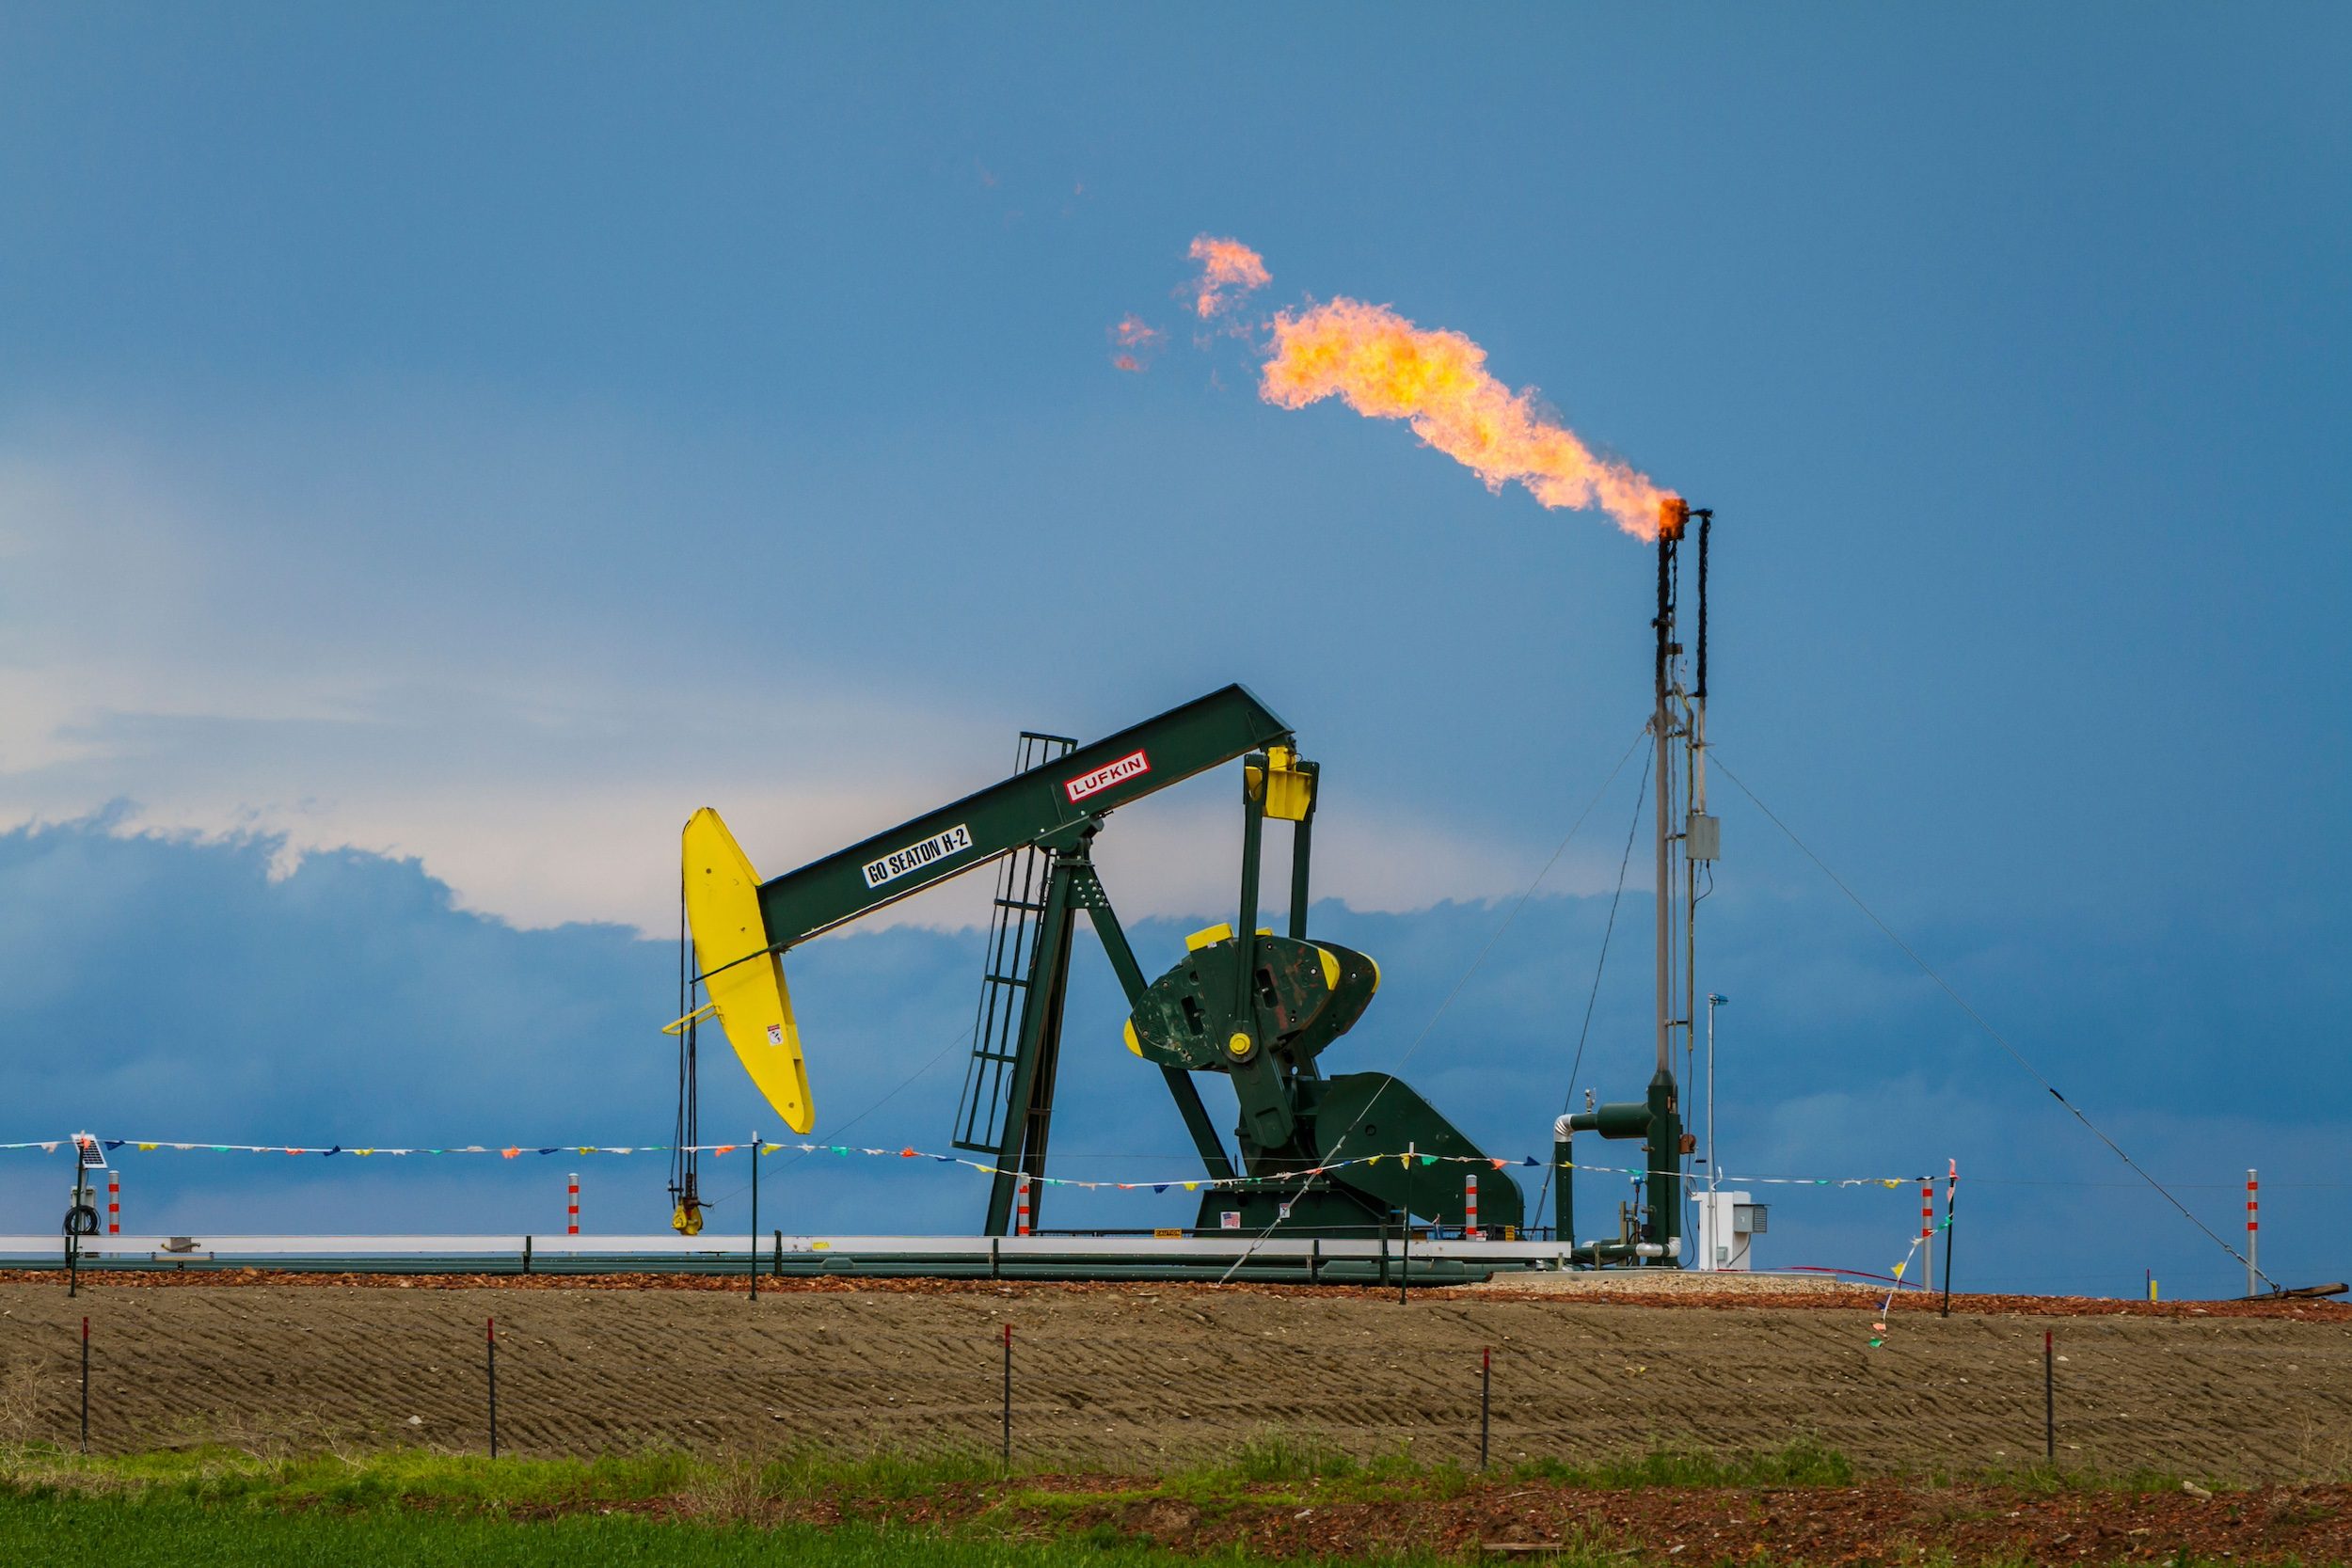 DG8B0G Natural gas flaring and a pumper in the Bakken shale oil fields near Williston, North Dakota, USA.